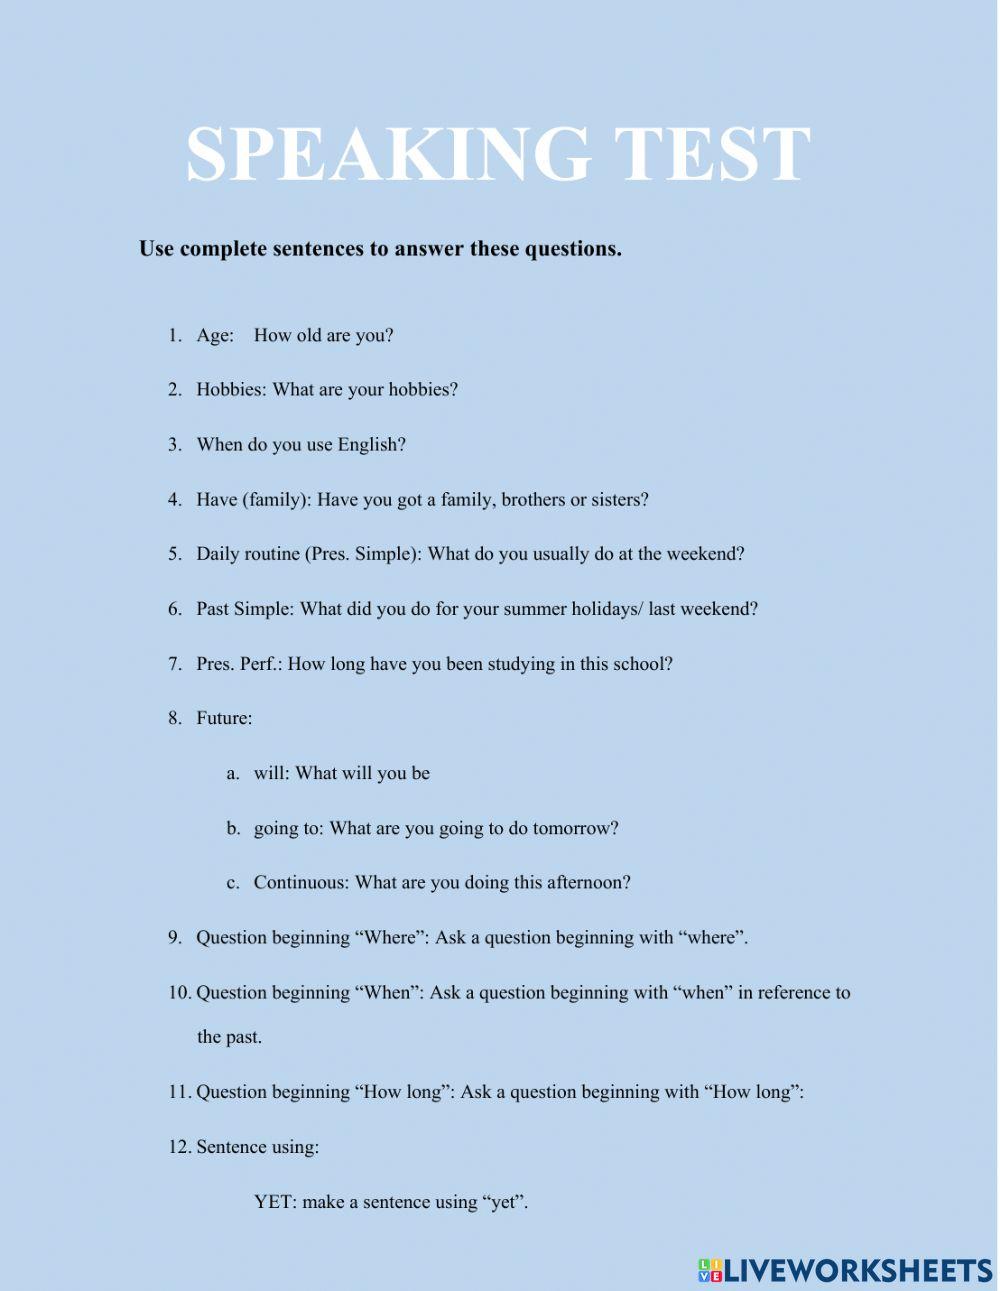 Speaking Test English as a Second Language (ESL) worksheet | Live Worksheets